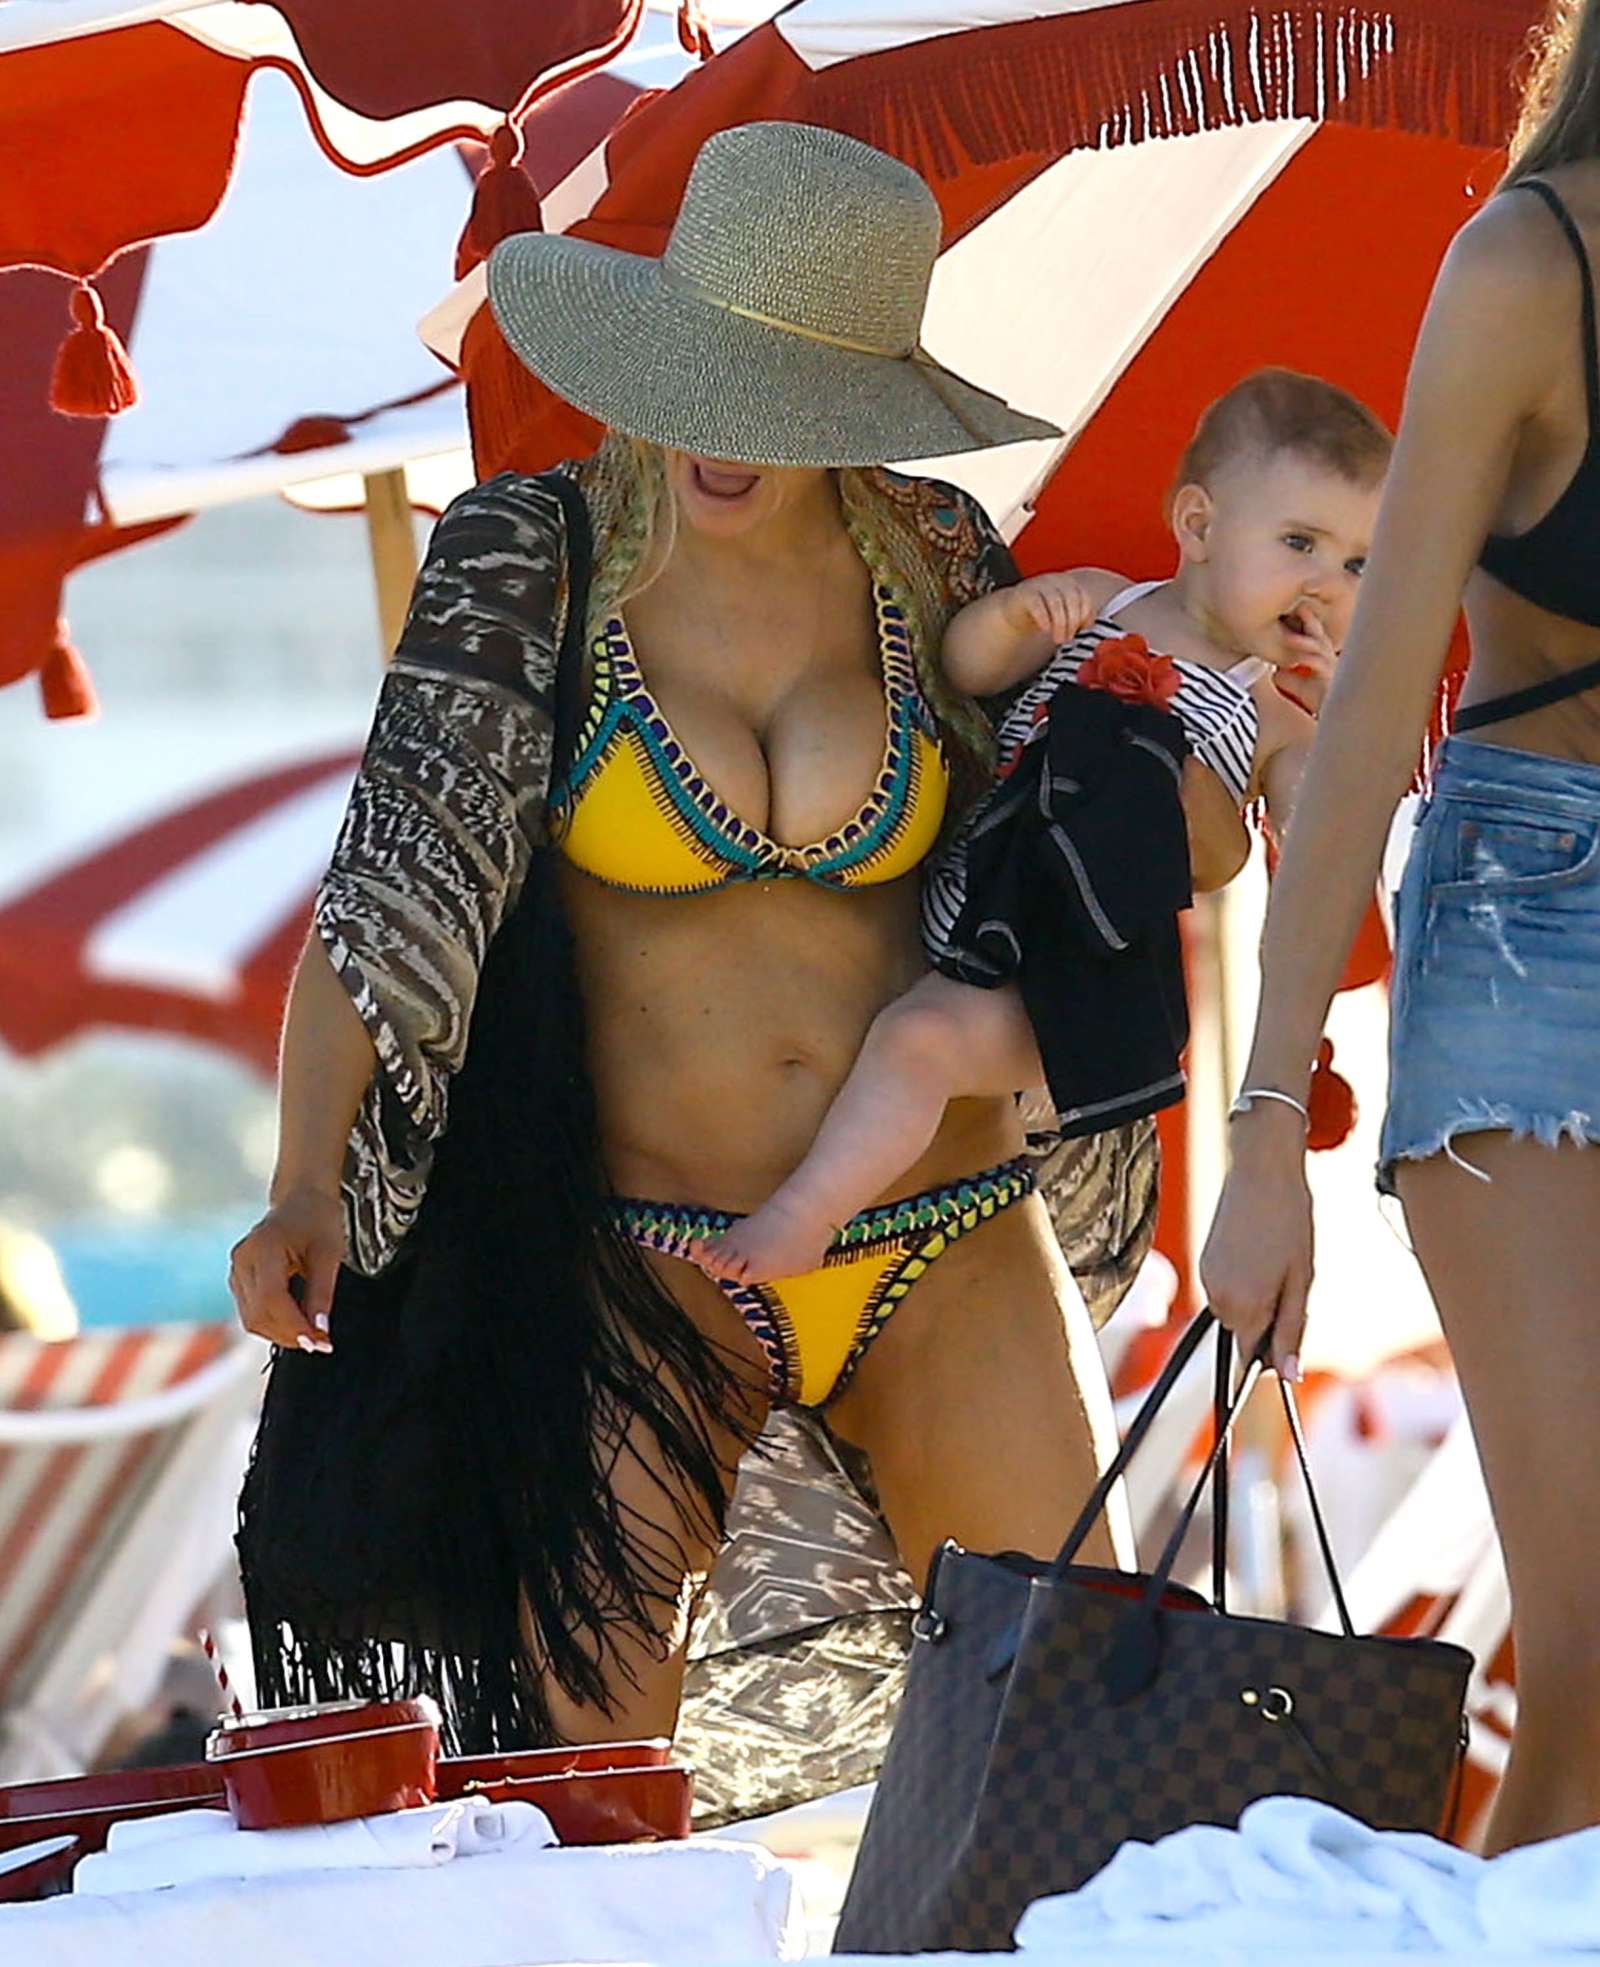 Dorit Kemsley in Bikini on the beach in Miami. 